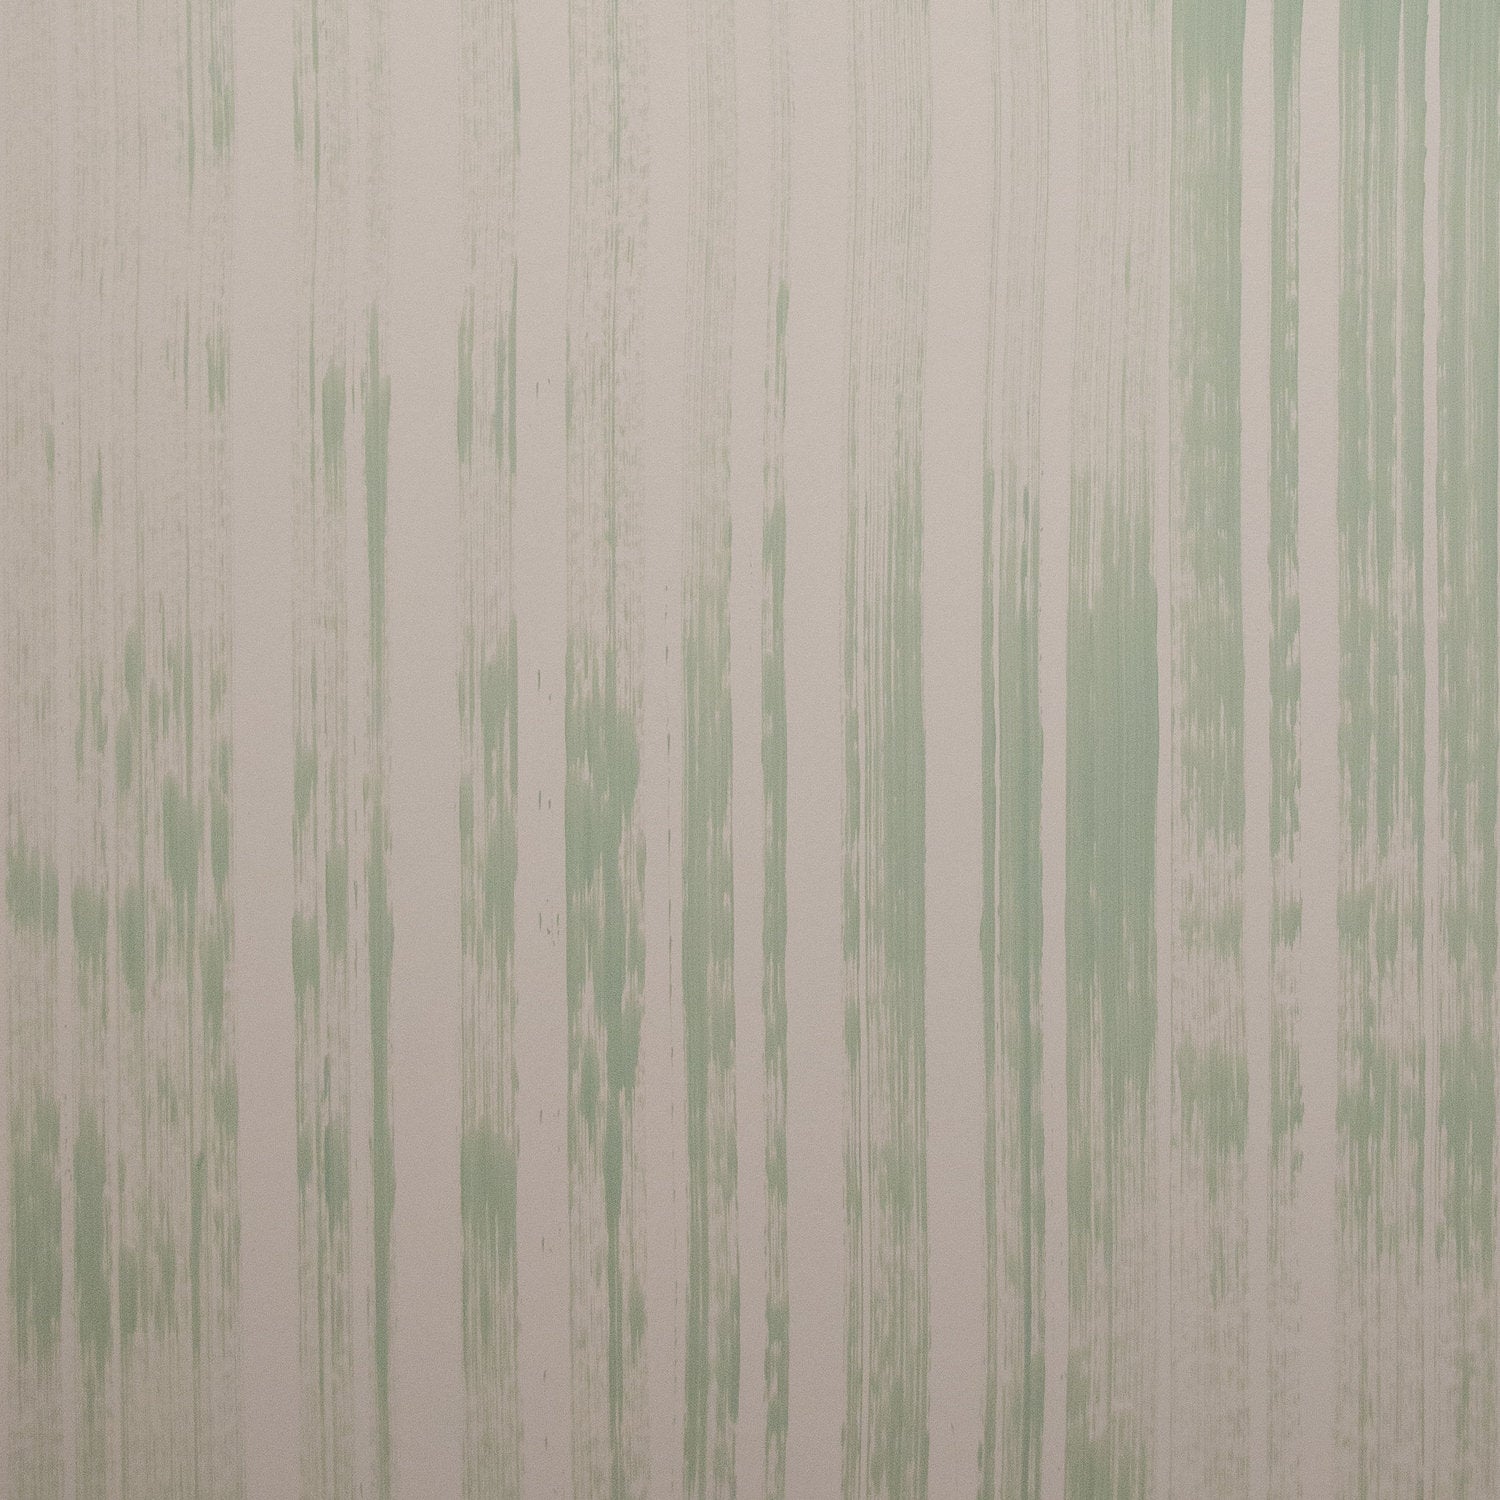 Detail of wallpaper in a muted stripe pattern in cream.